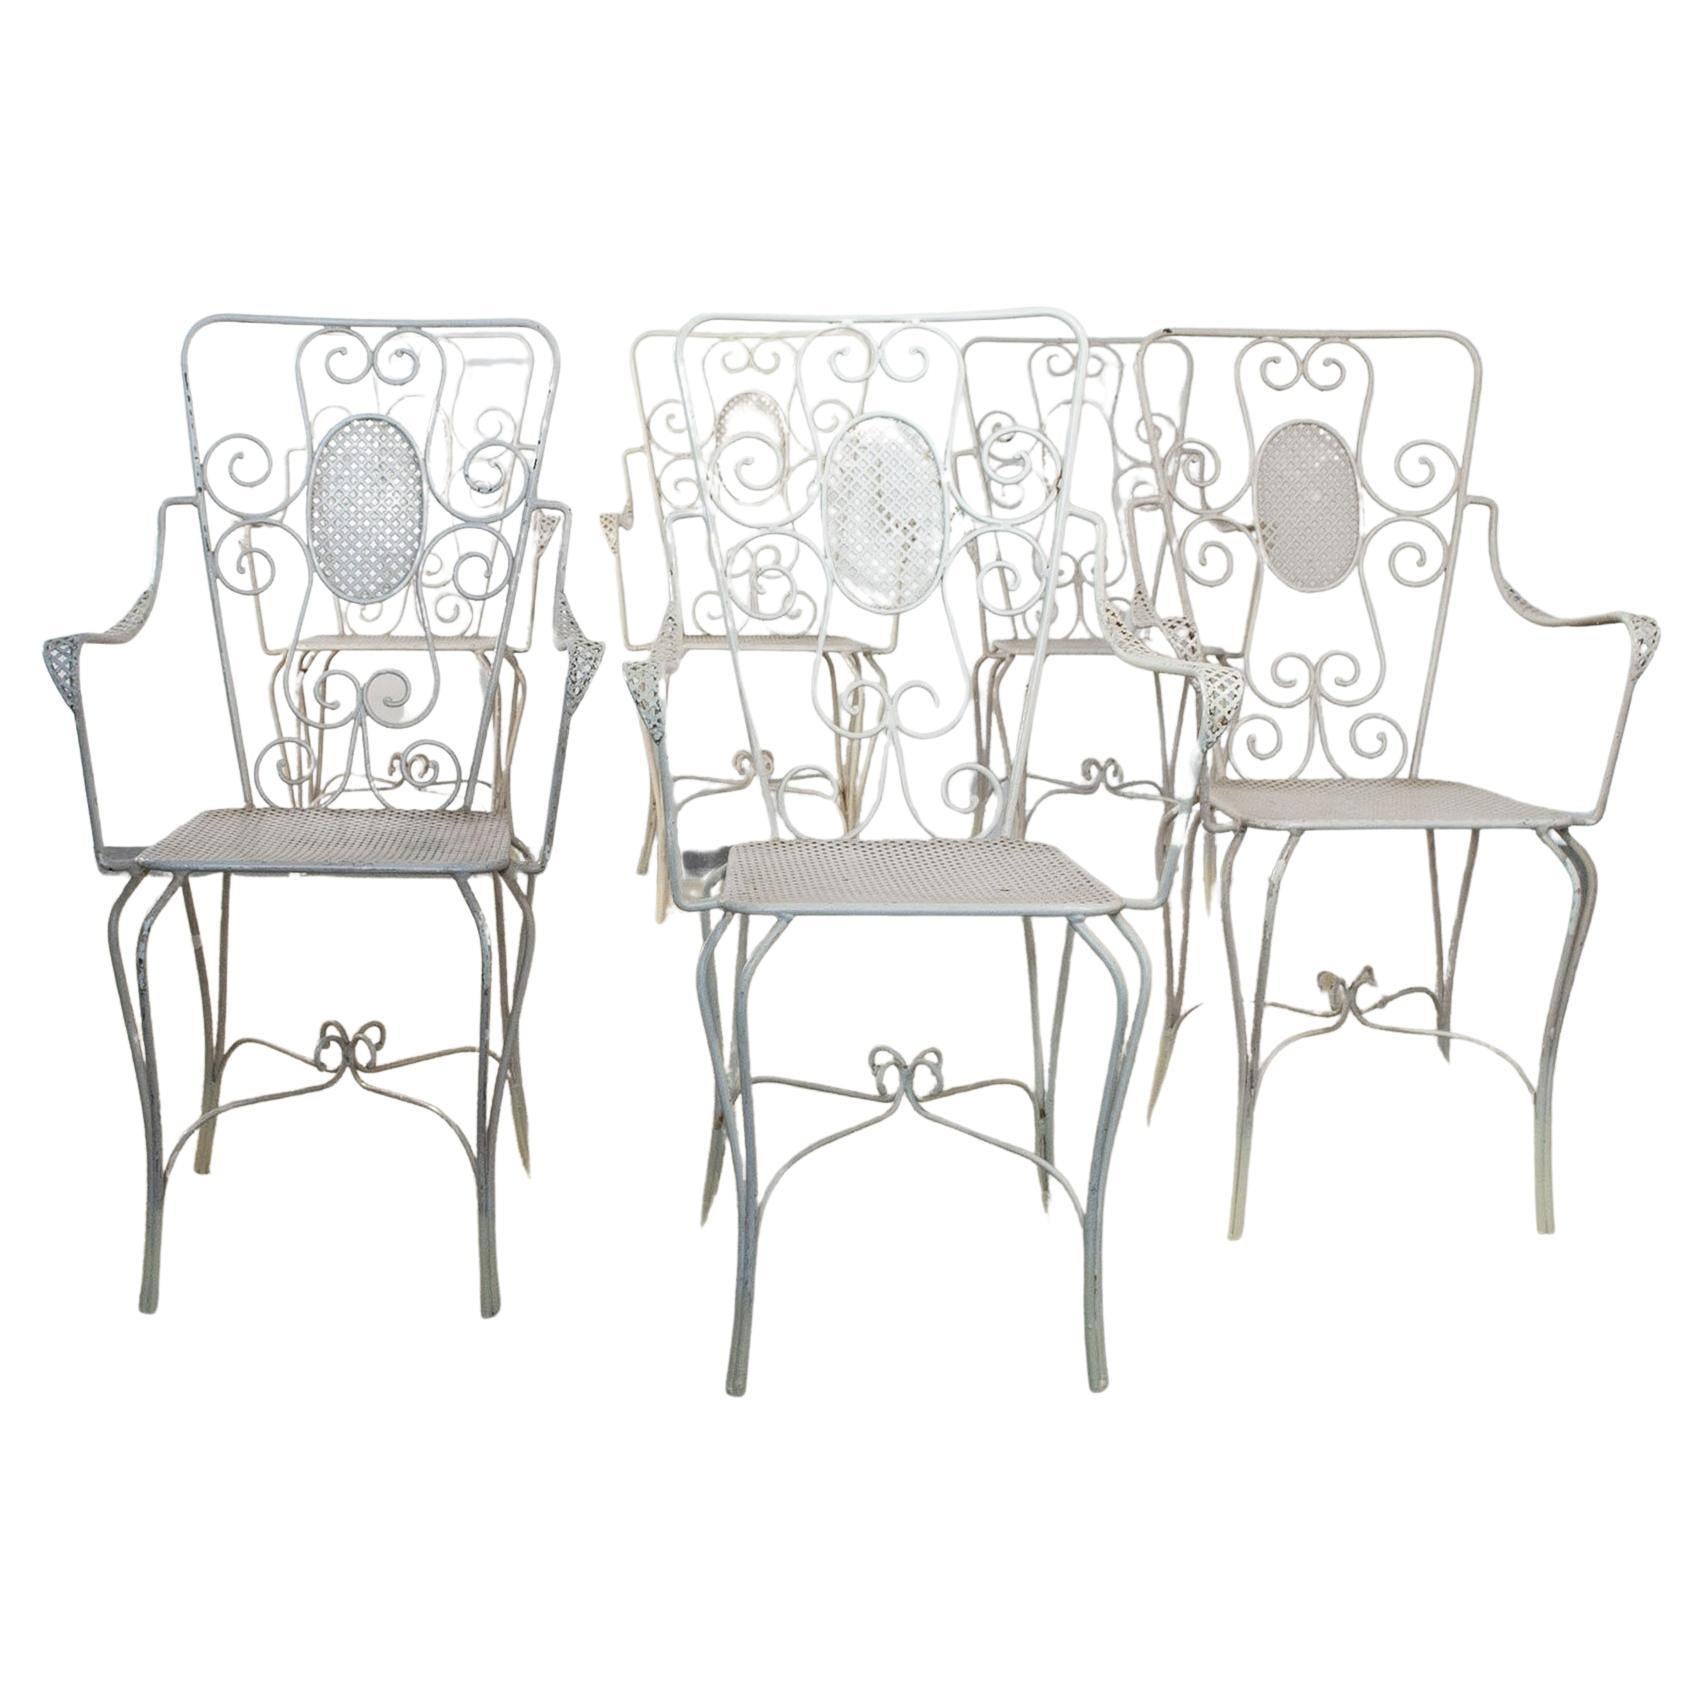 Casa E Giardino, Six White Painted Metal Chairs, 1942 For Sale